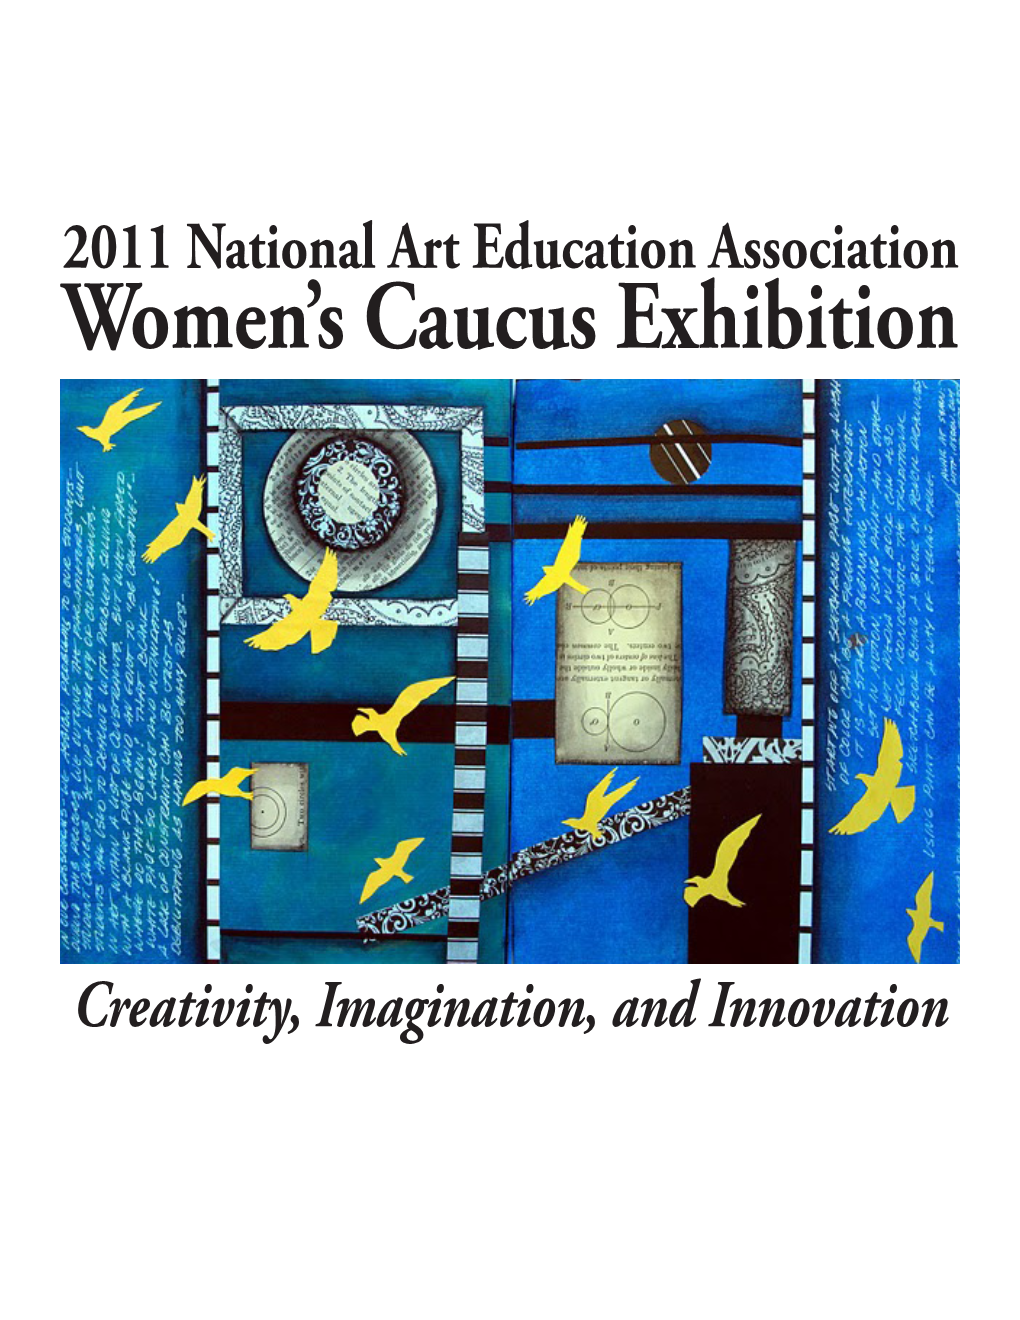 Women's Caucus Exhibition